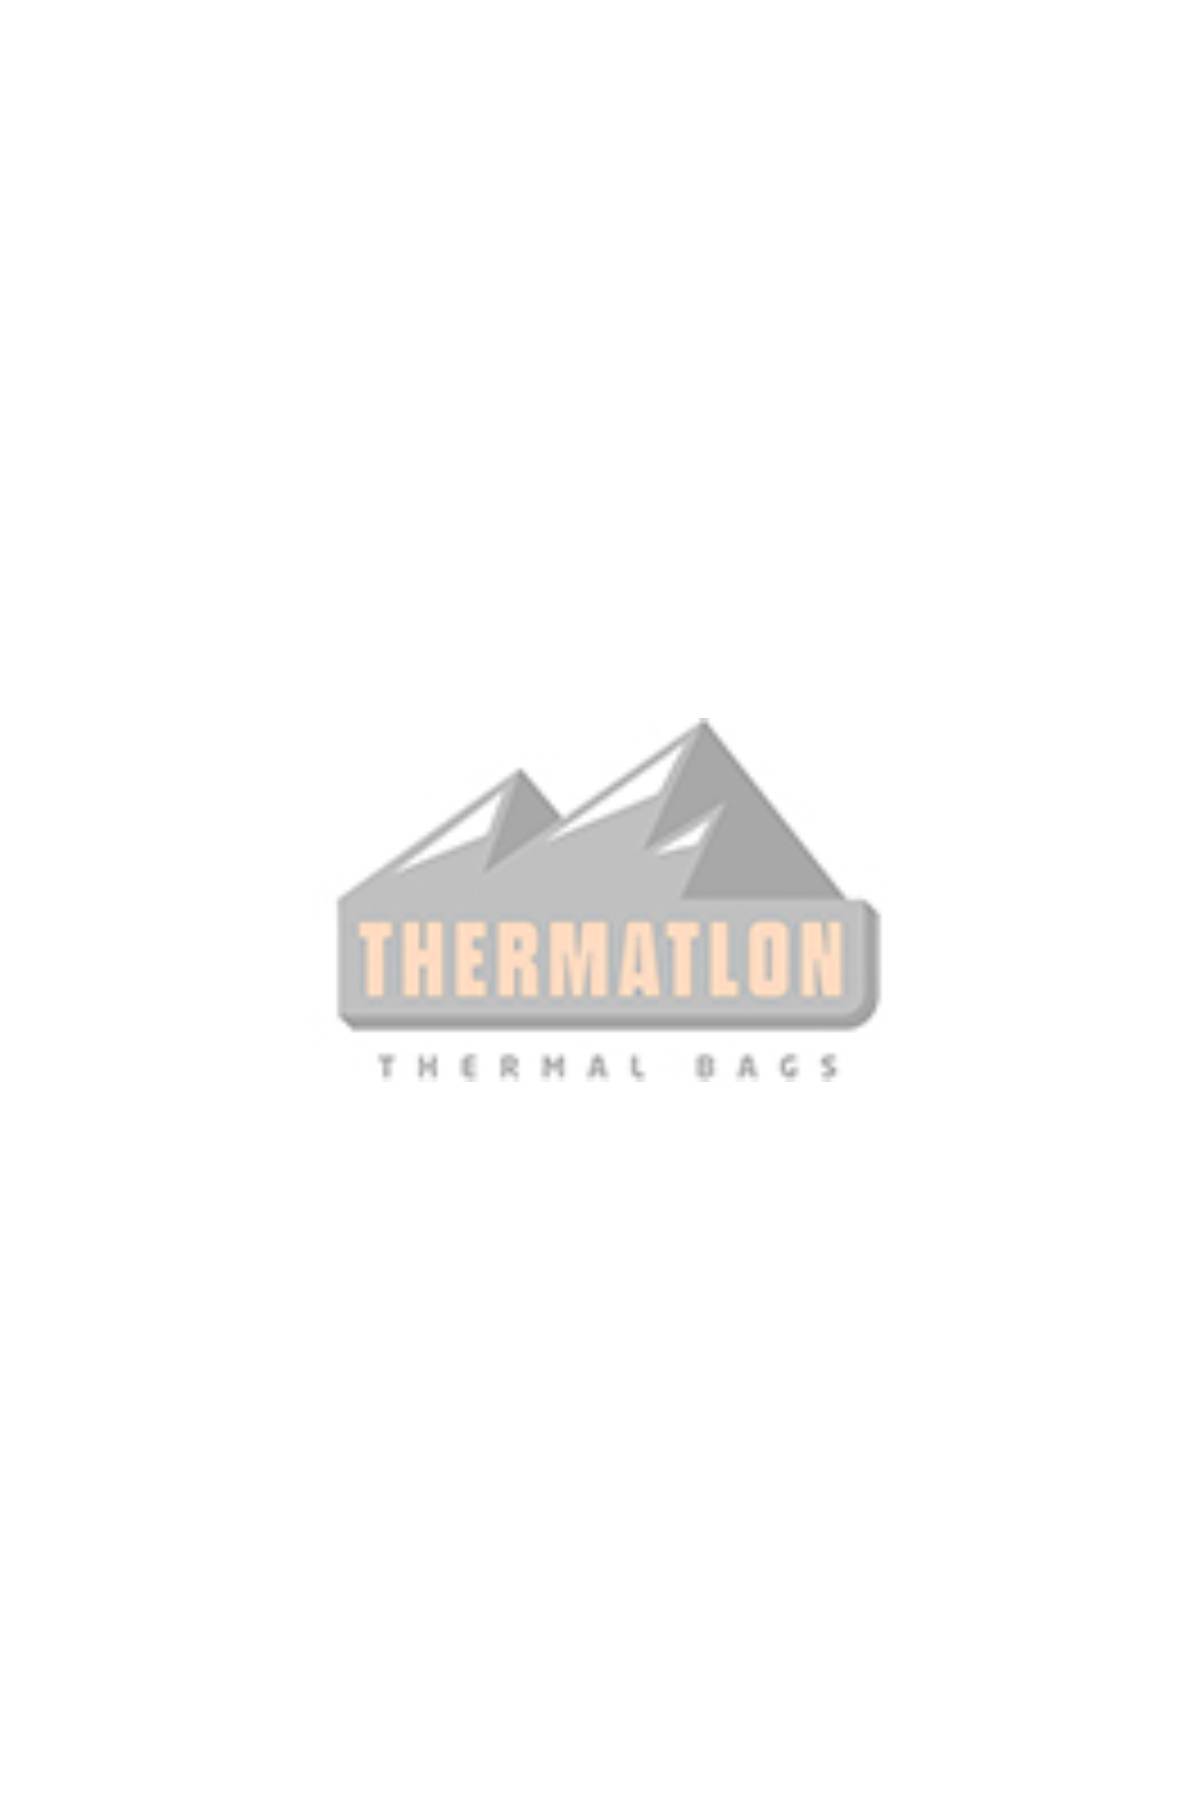 THERMATLON INSULIN COOLER BAG